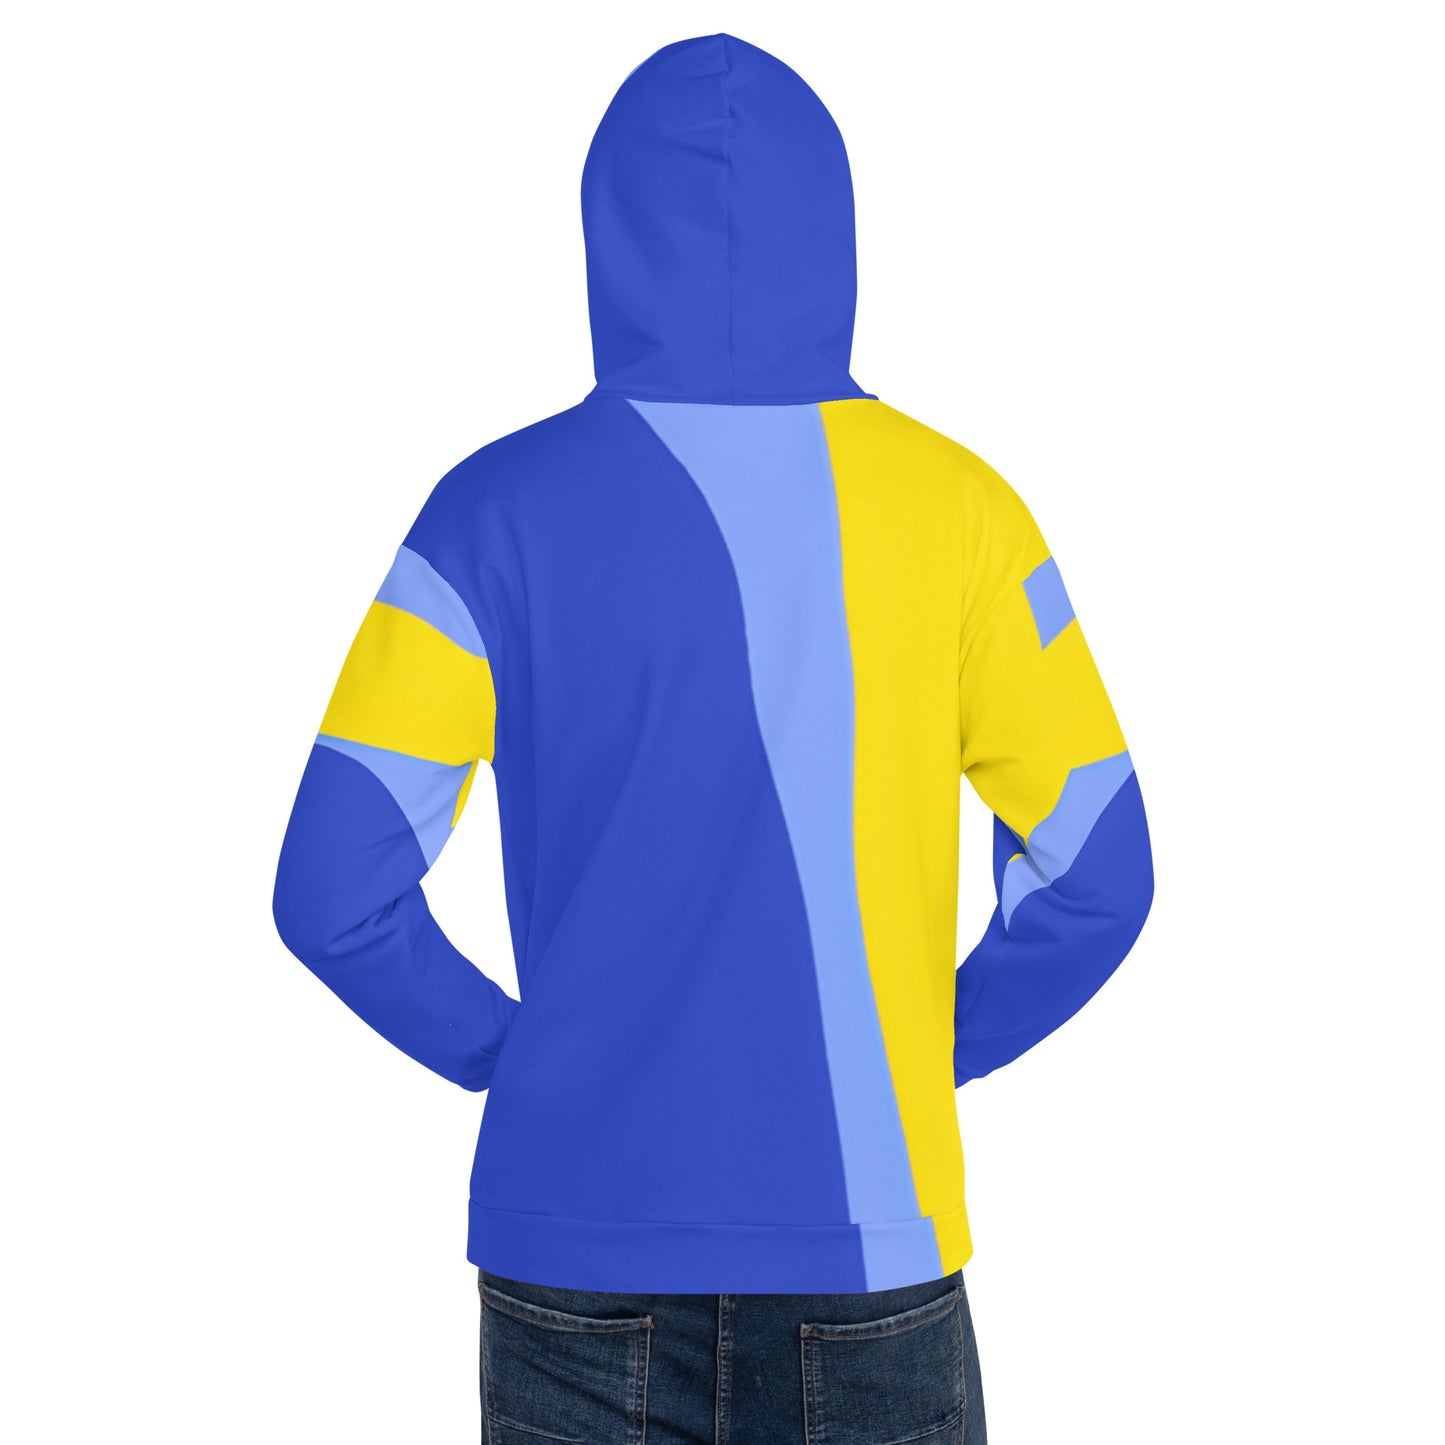 Humble Sportswear™ Men's Spark Blue Pullover Hoodie - Mireille Fine Art